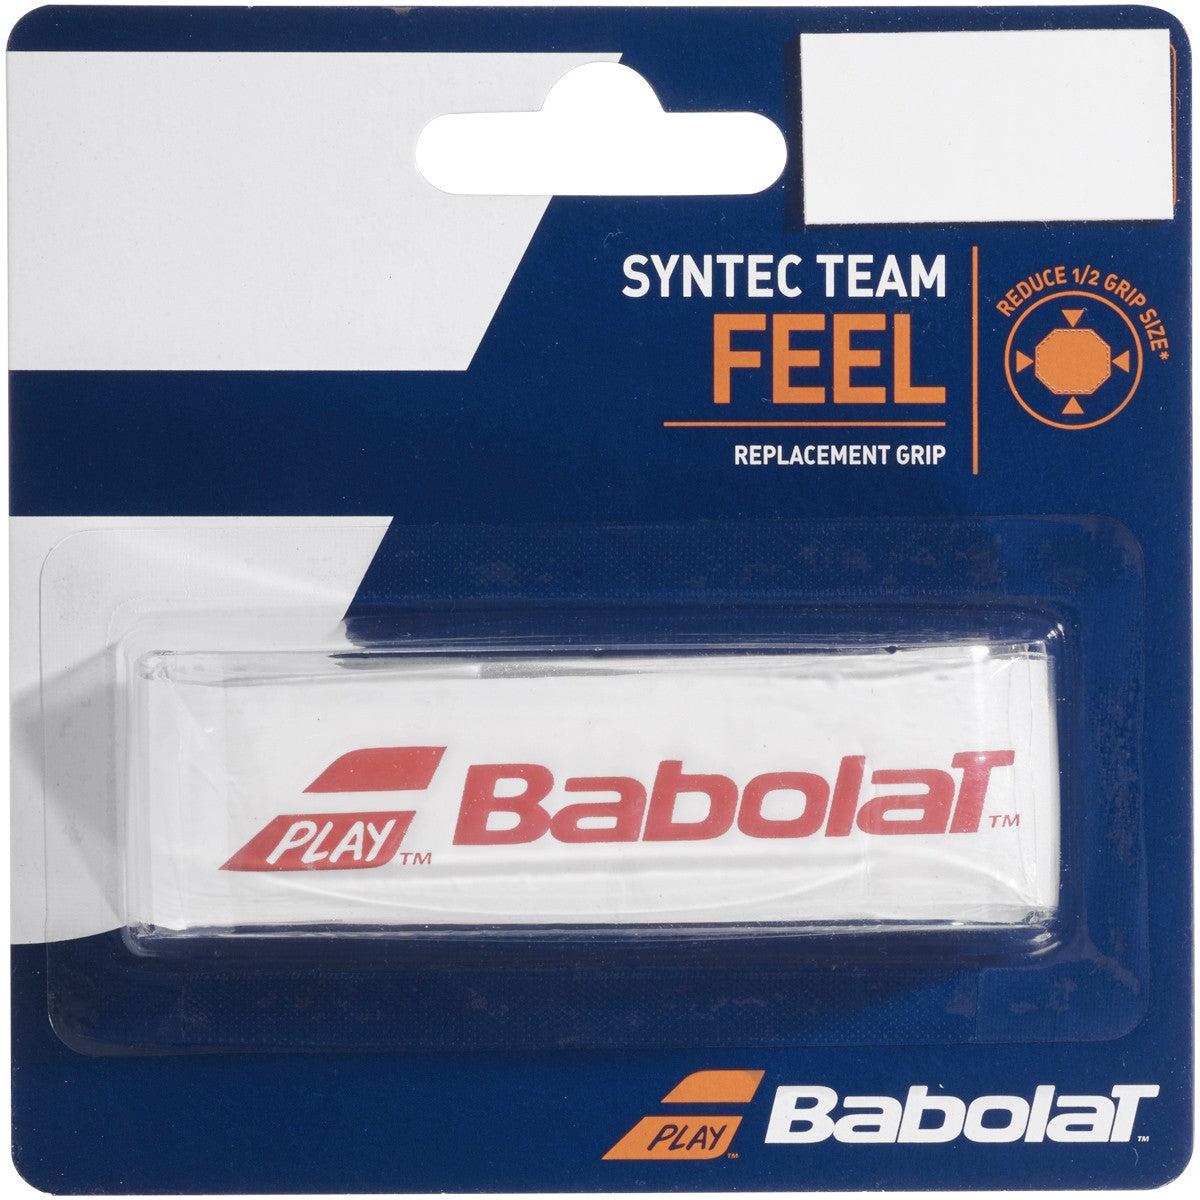 Babolat Syntec Team Feel Cushion Grip